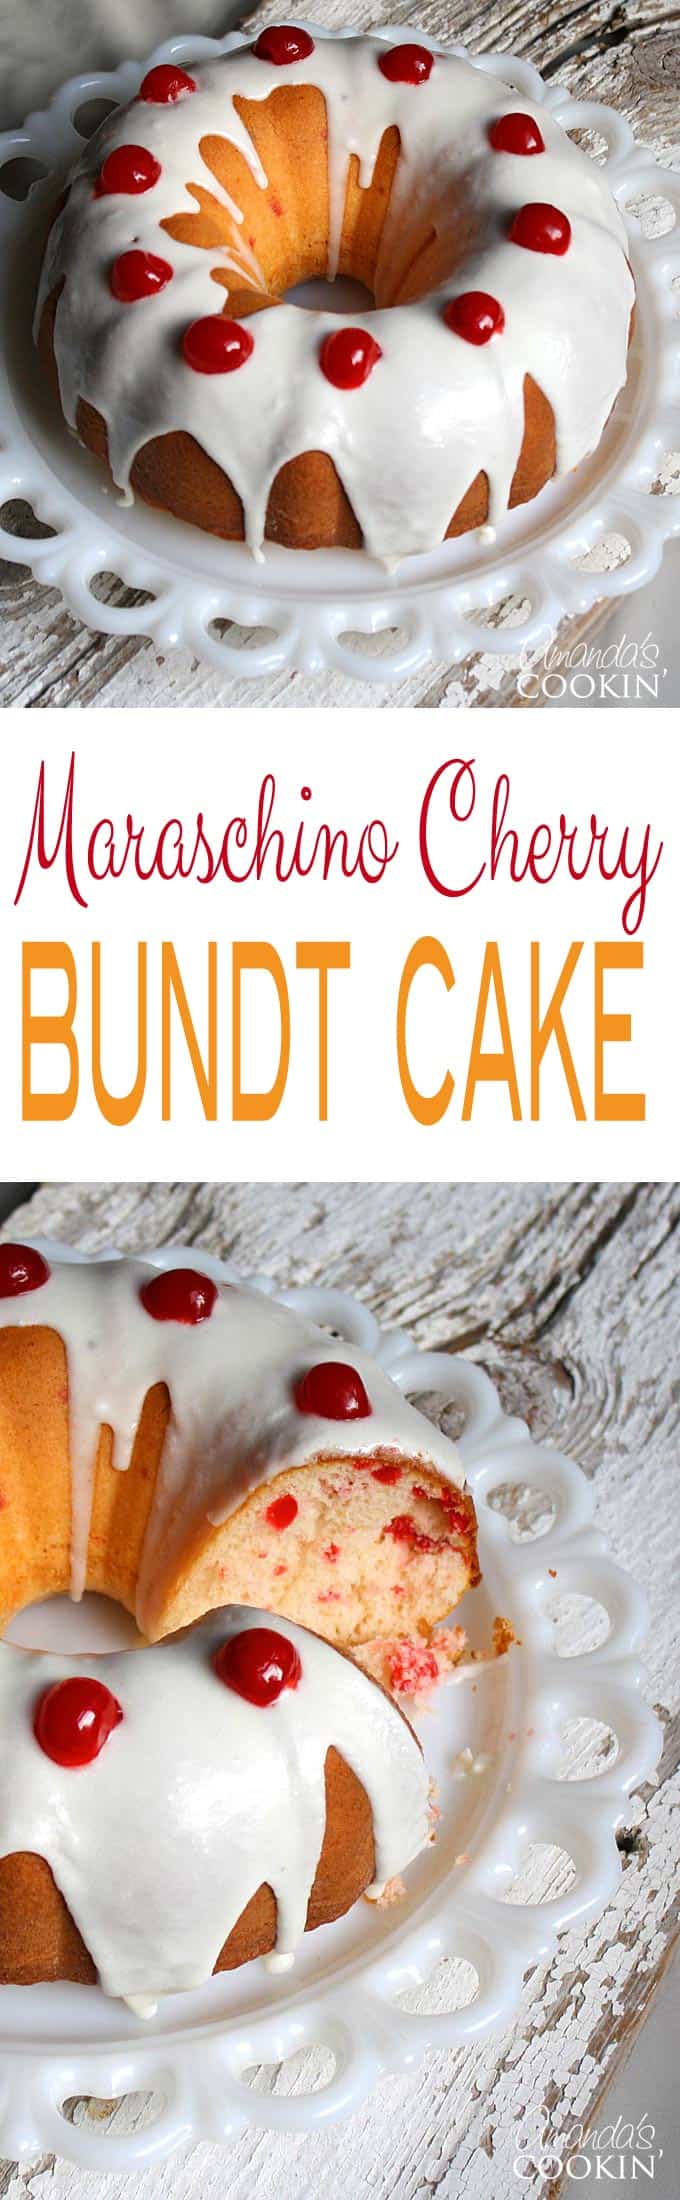 Photos of a Maraschino Cherry Bundt Cake.